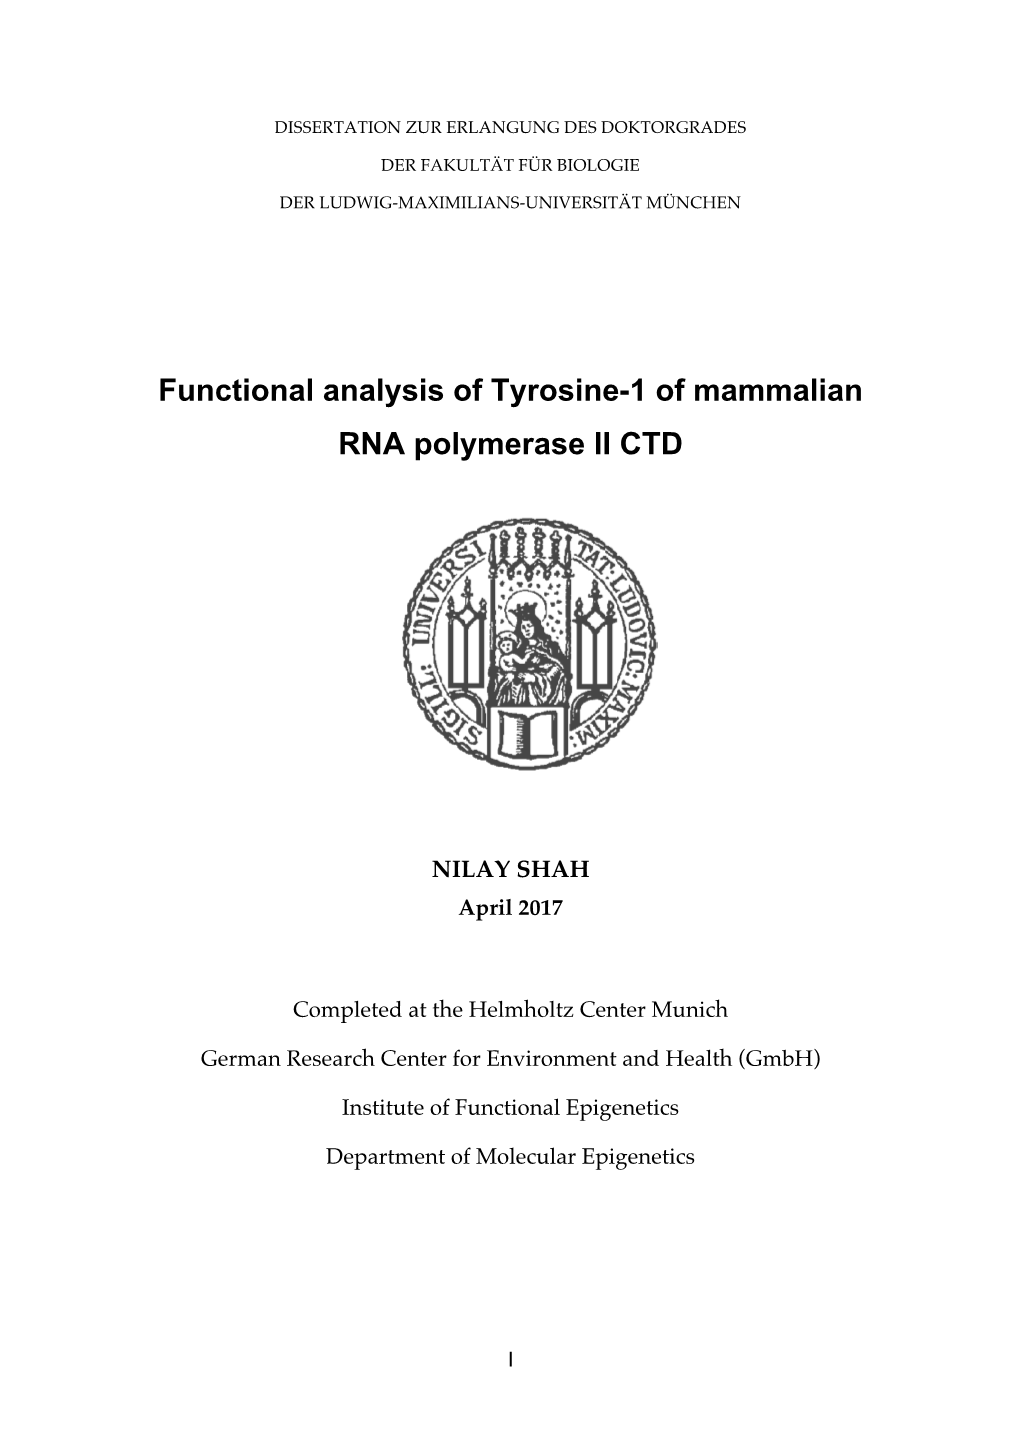 Functional Analysis of Tyrosine-1 of Mammalian RNA Polymerase II CTD